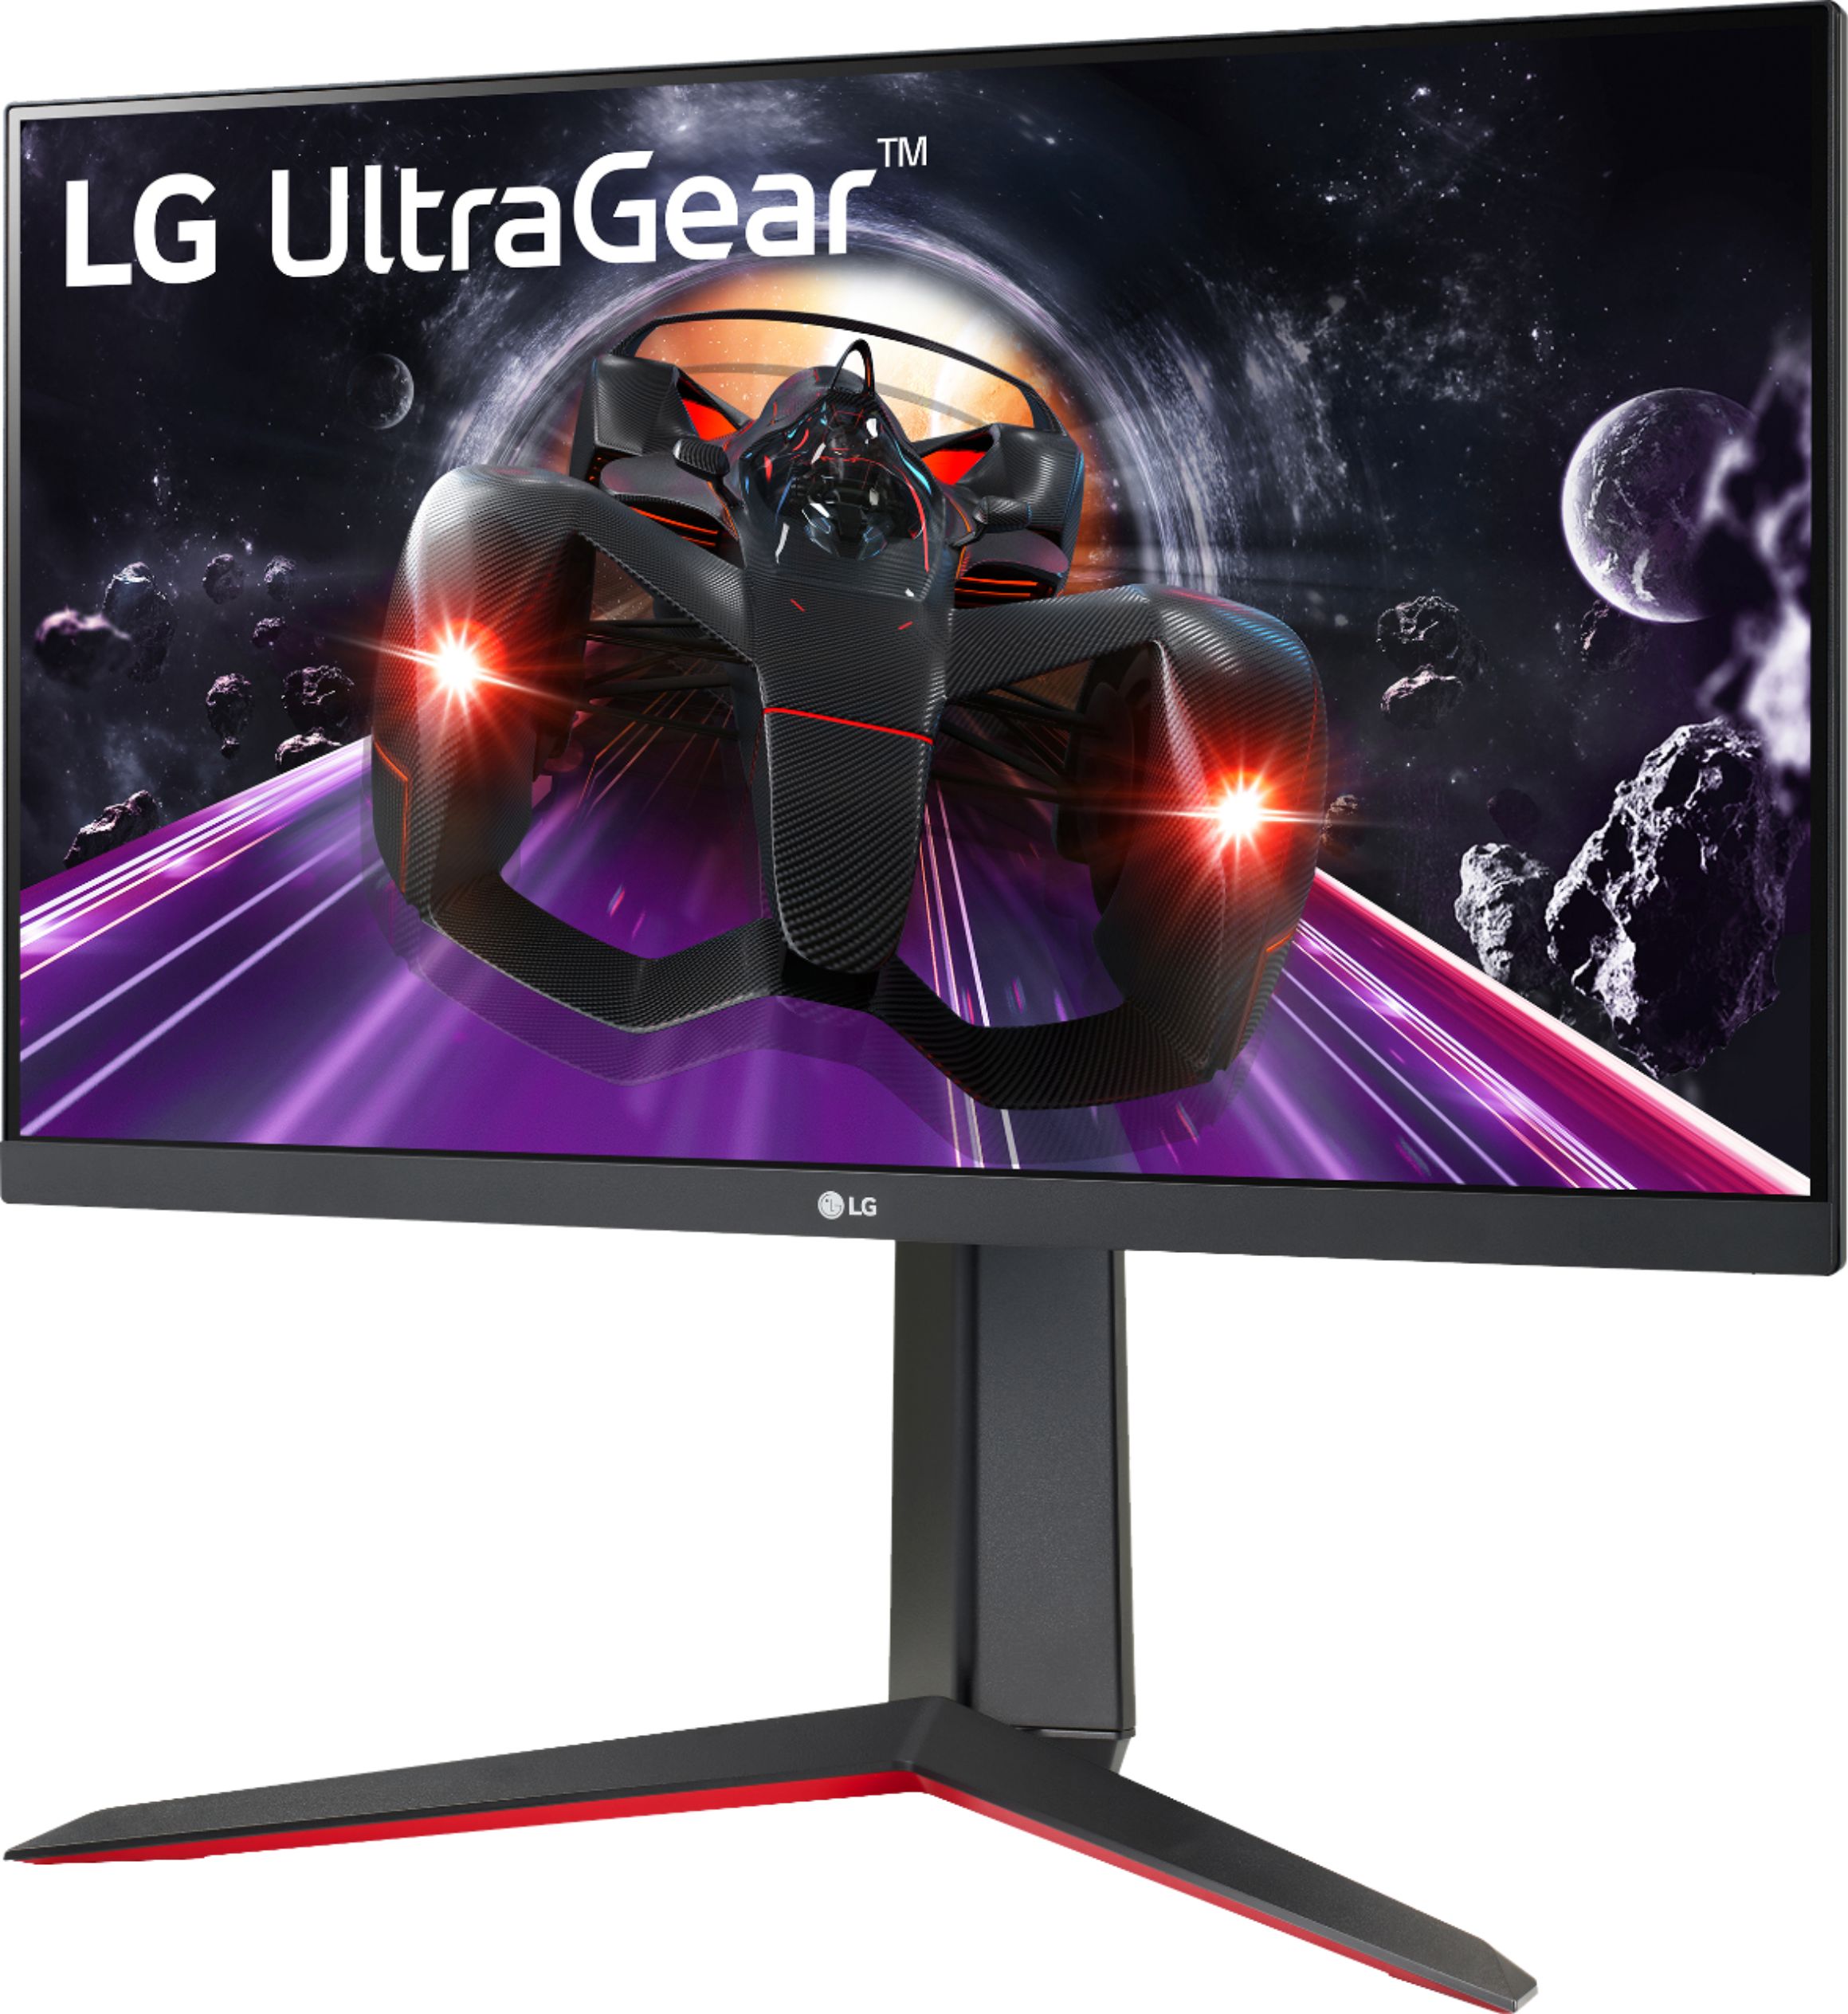 LG UltraGear: monitor gaming da 24 FHD 144Hz al 37%